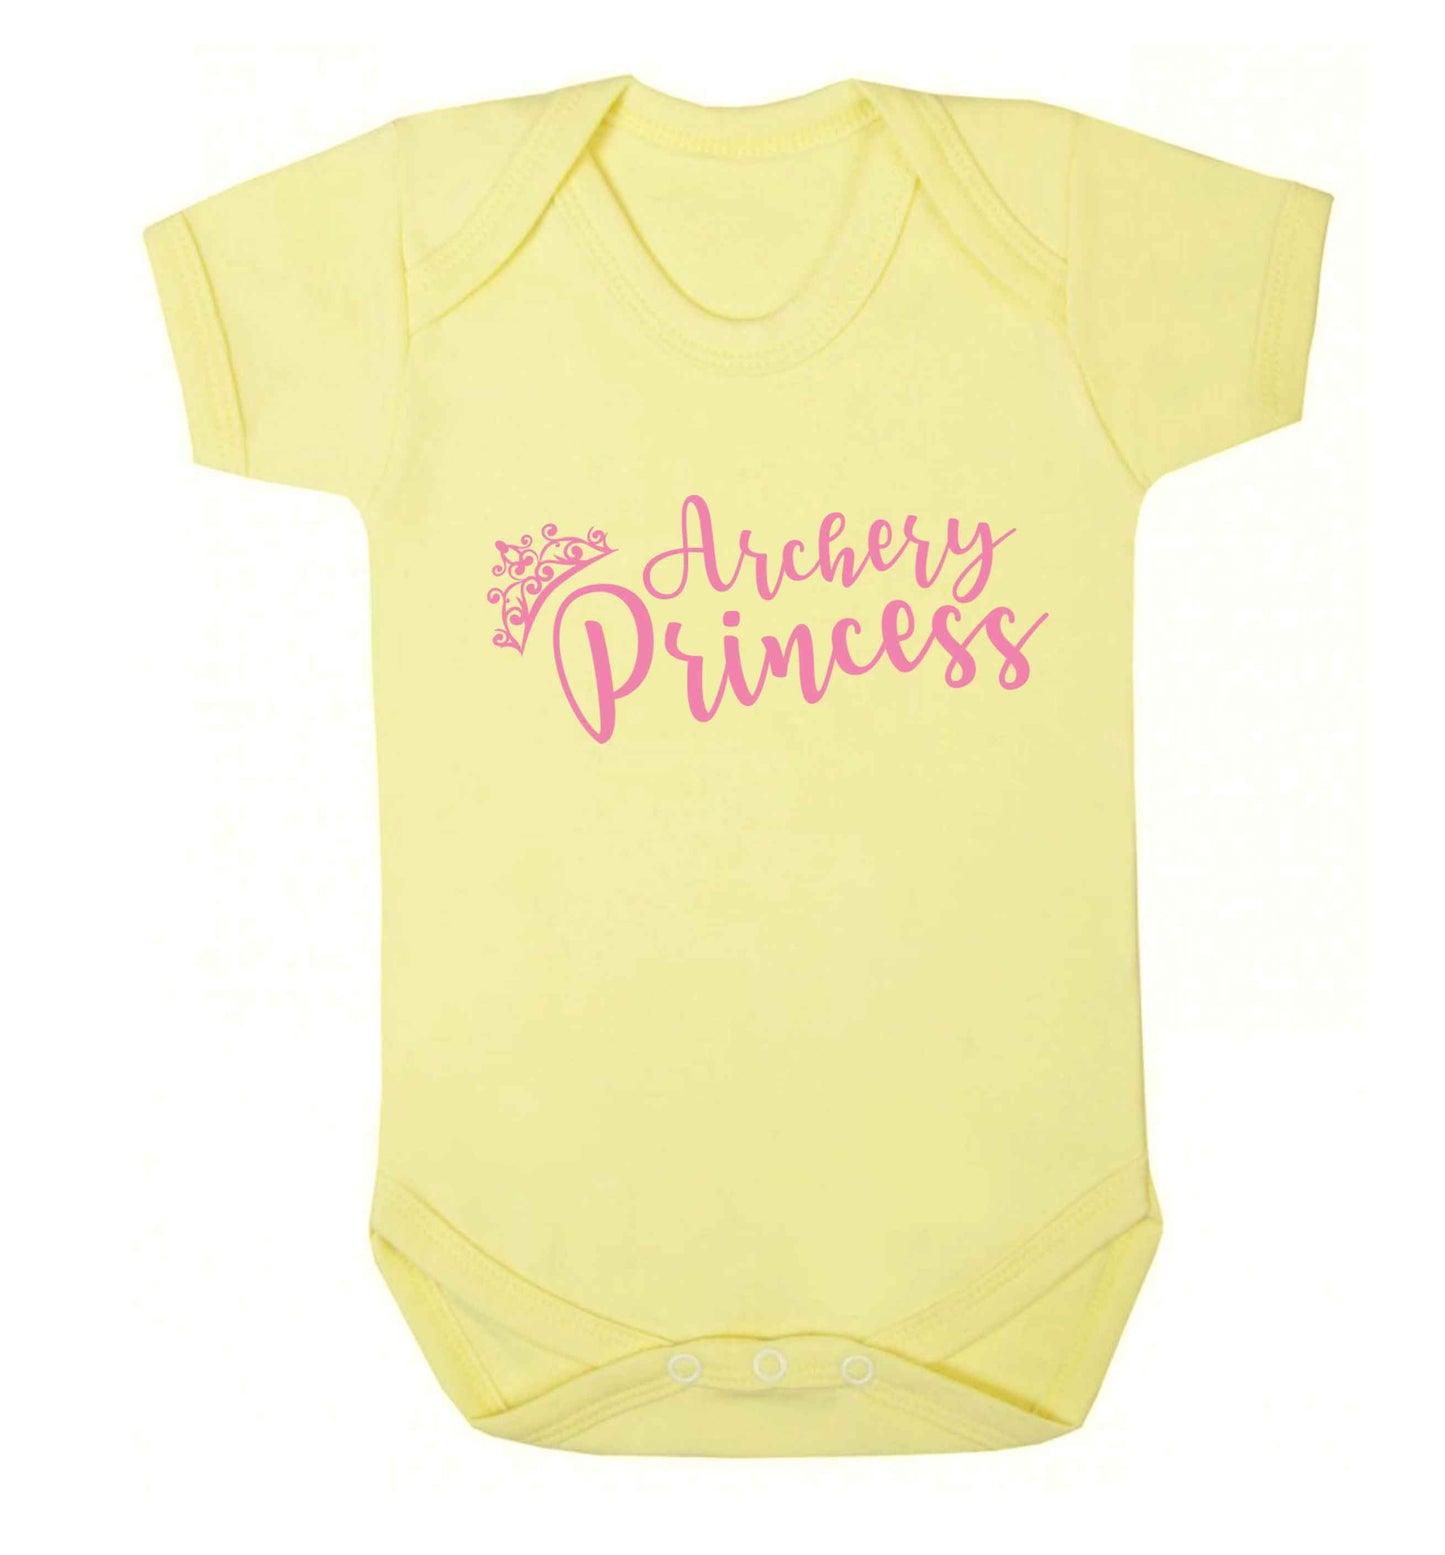 Archery princess Baby Vest pale yellow 18-24 months